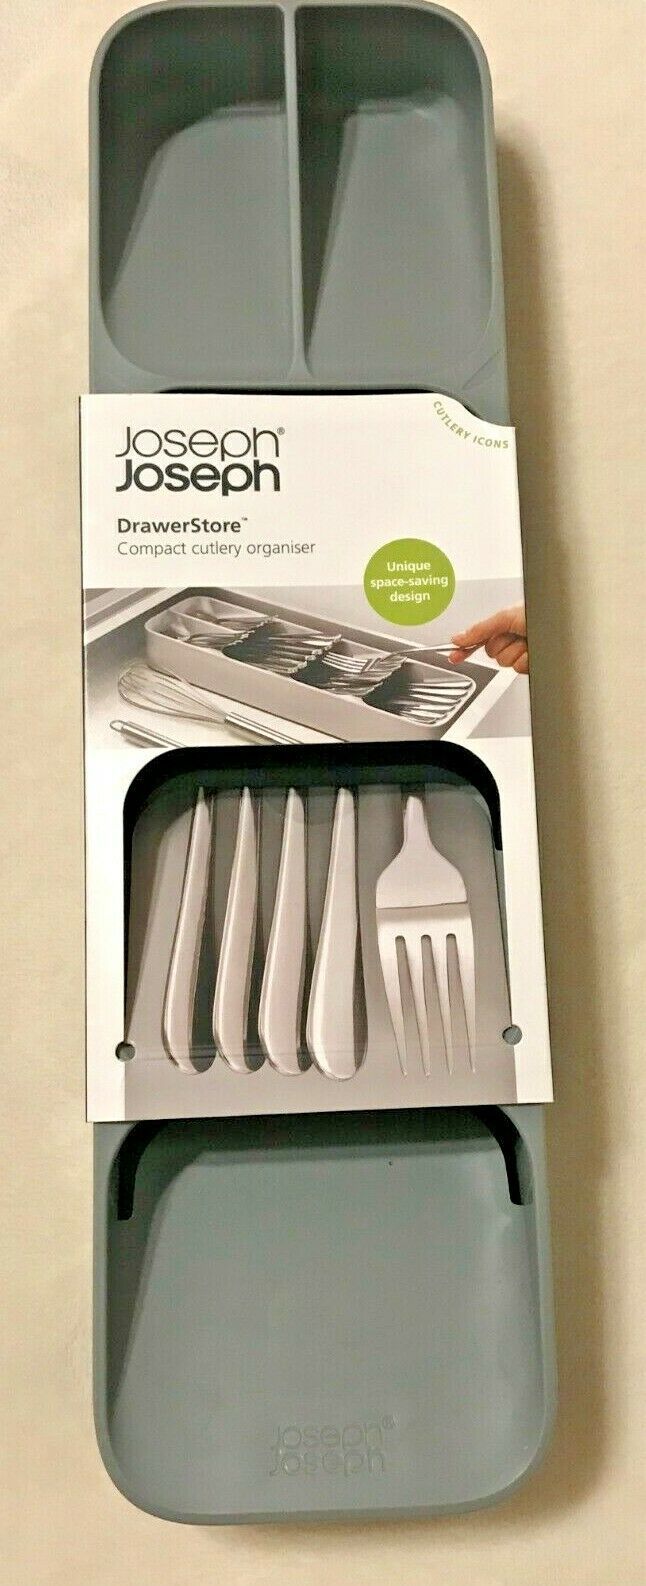 Joseph Joseph DrawerStore™ Compact Cutlery Organiser Gray 3-Tier Stack NEW - $4.95